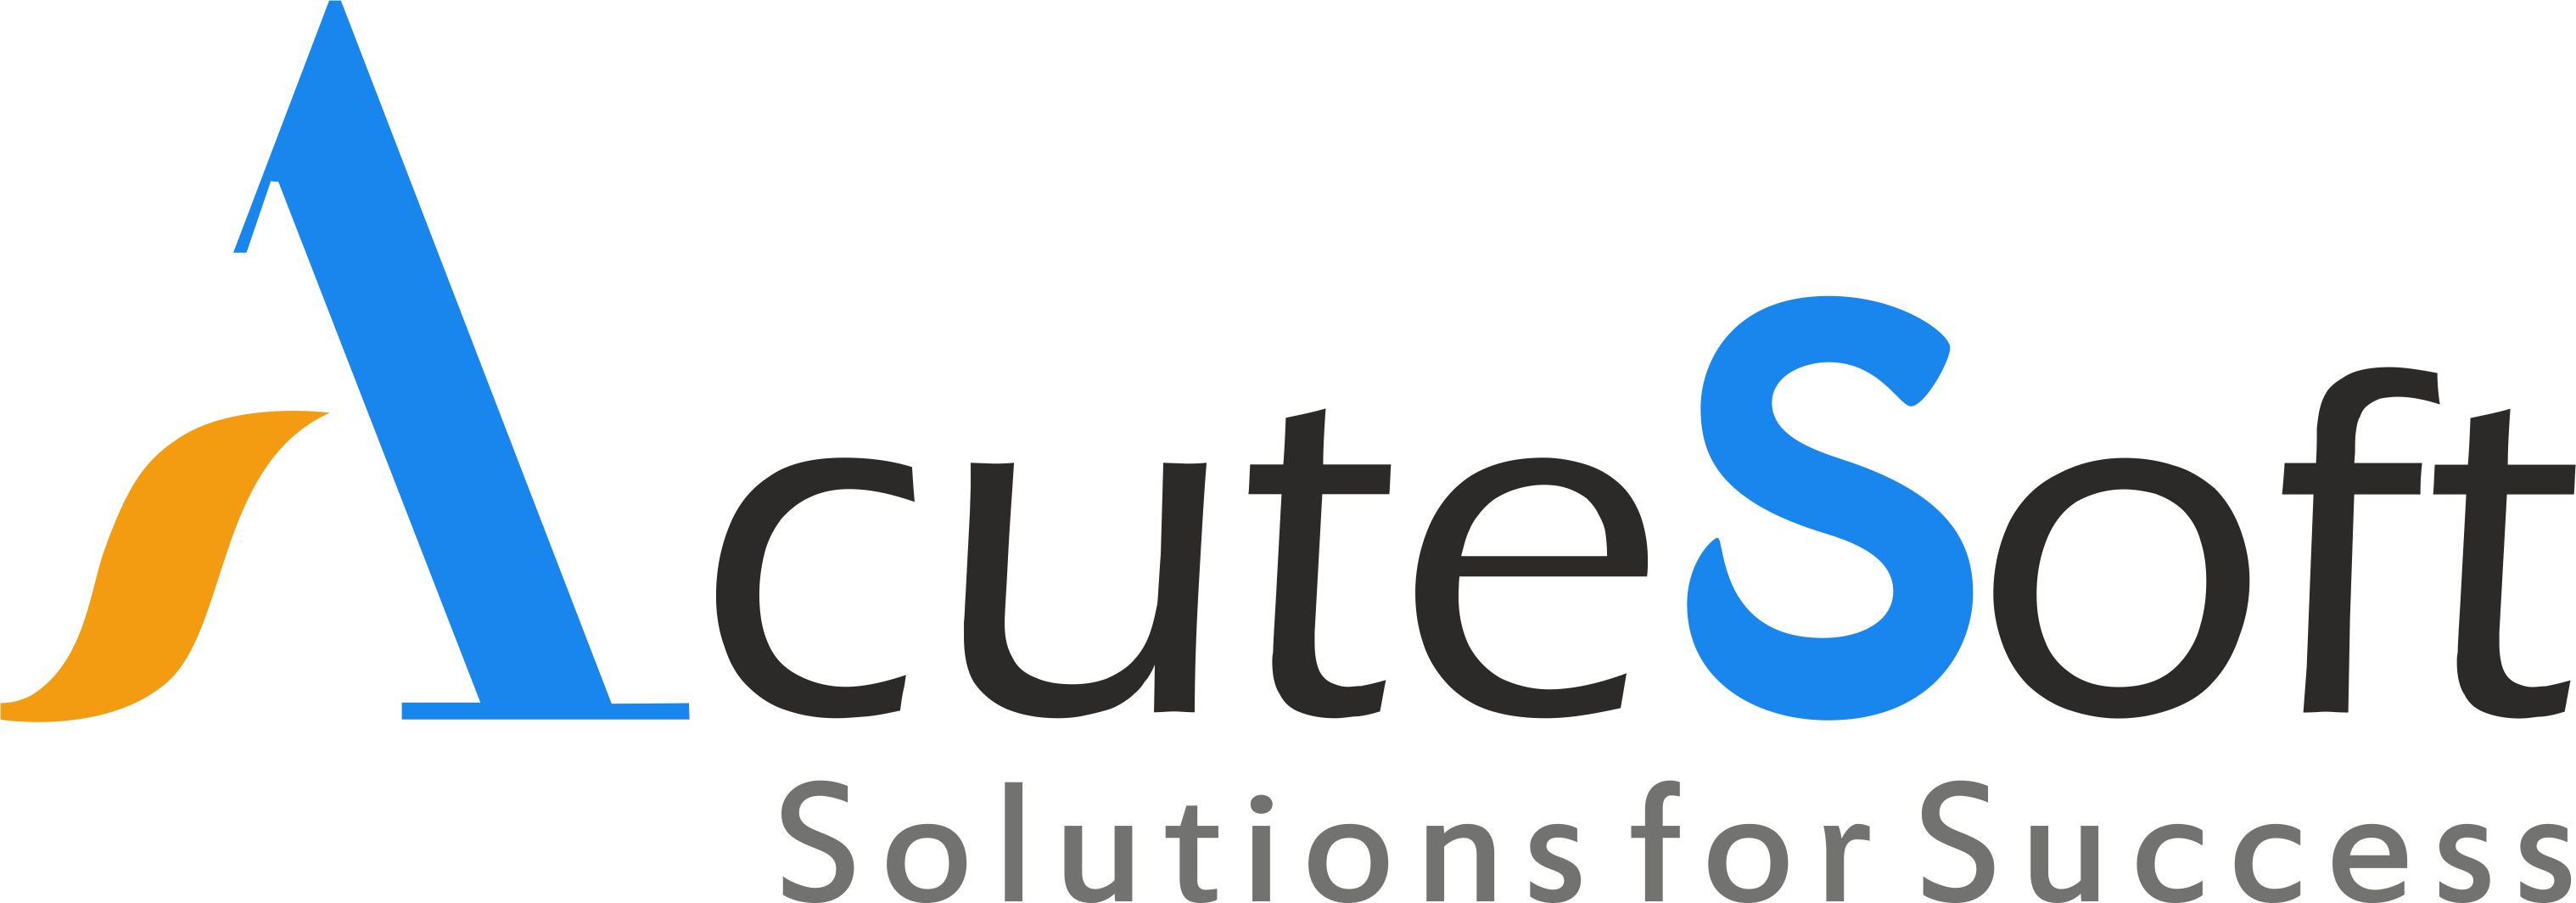 Acutesoft Solutions India Pvt.ltd